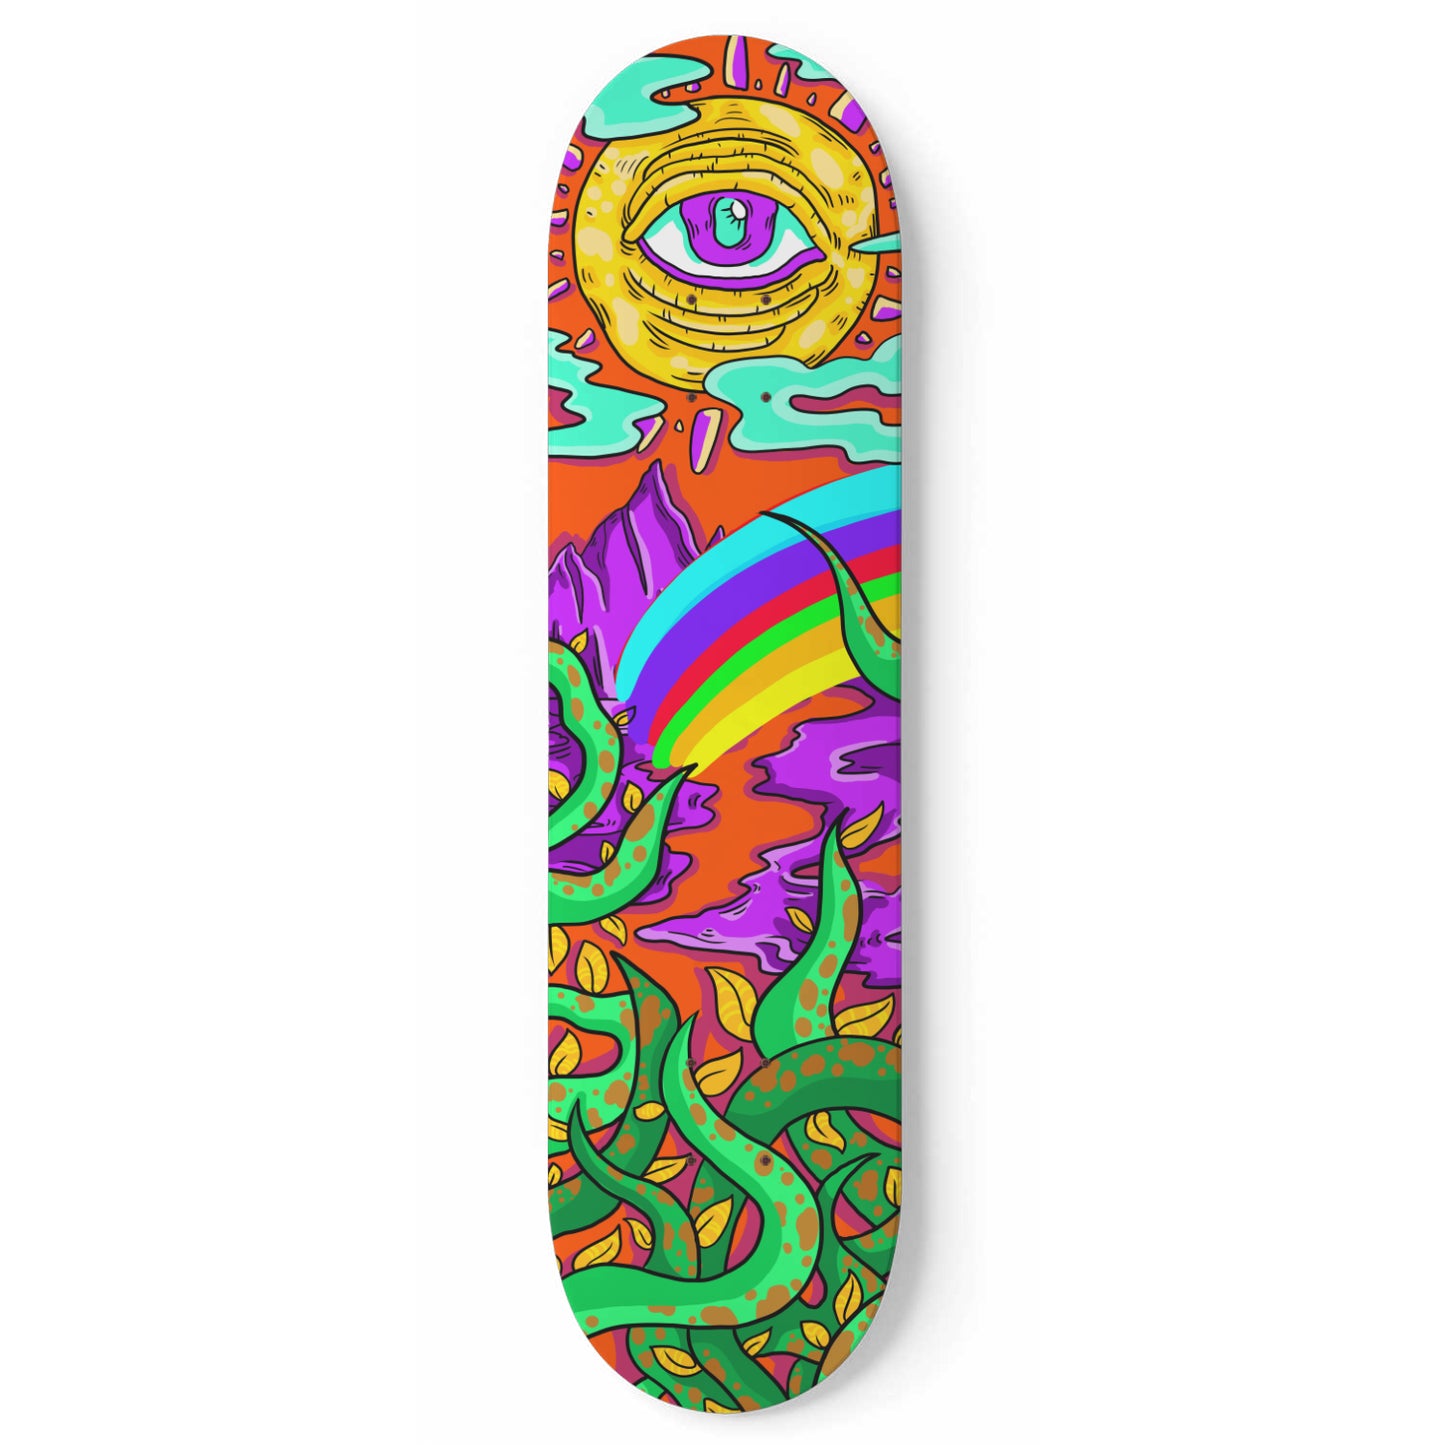 All-Seeing Eye Art - Skateboard Wall Art by PolymorphClub